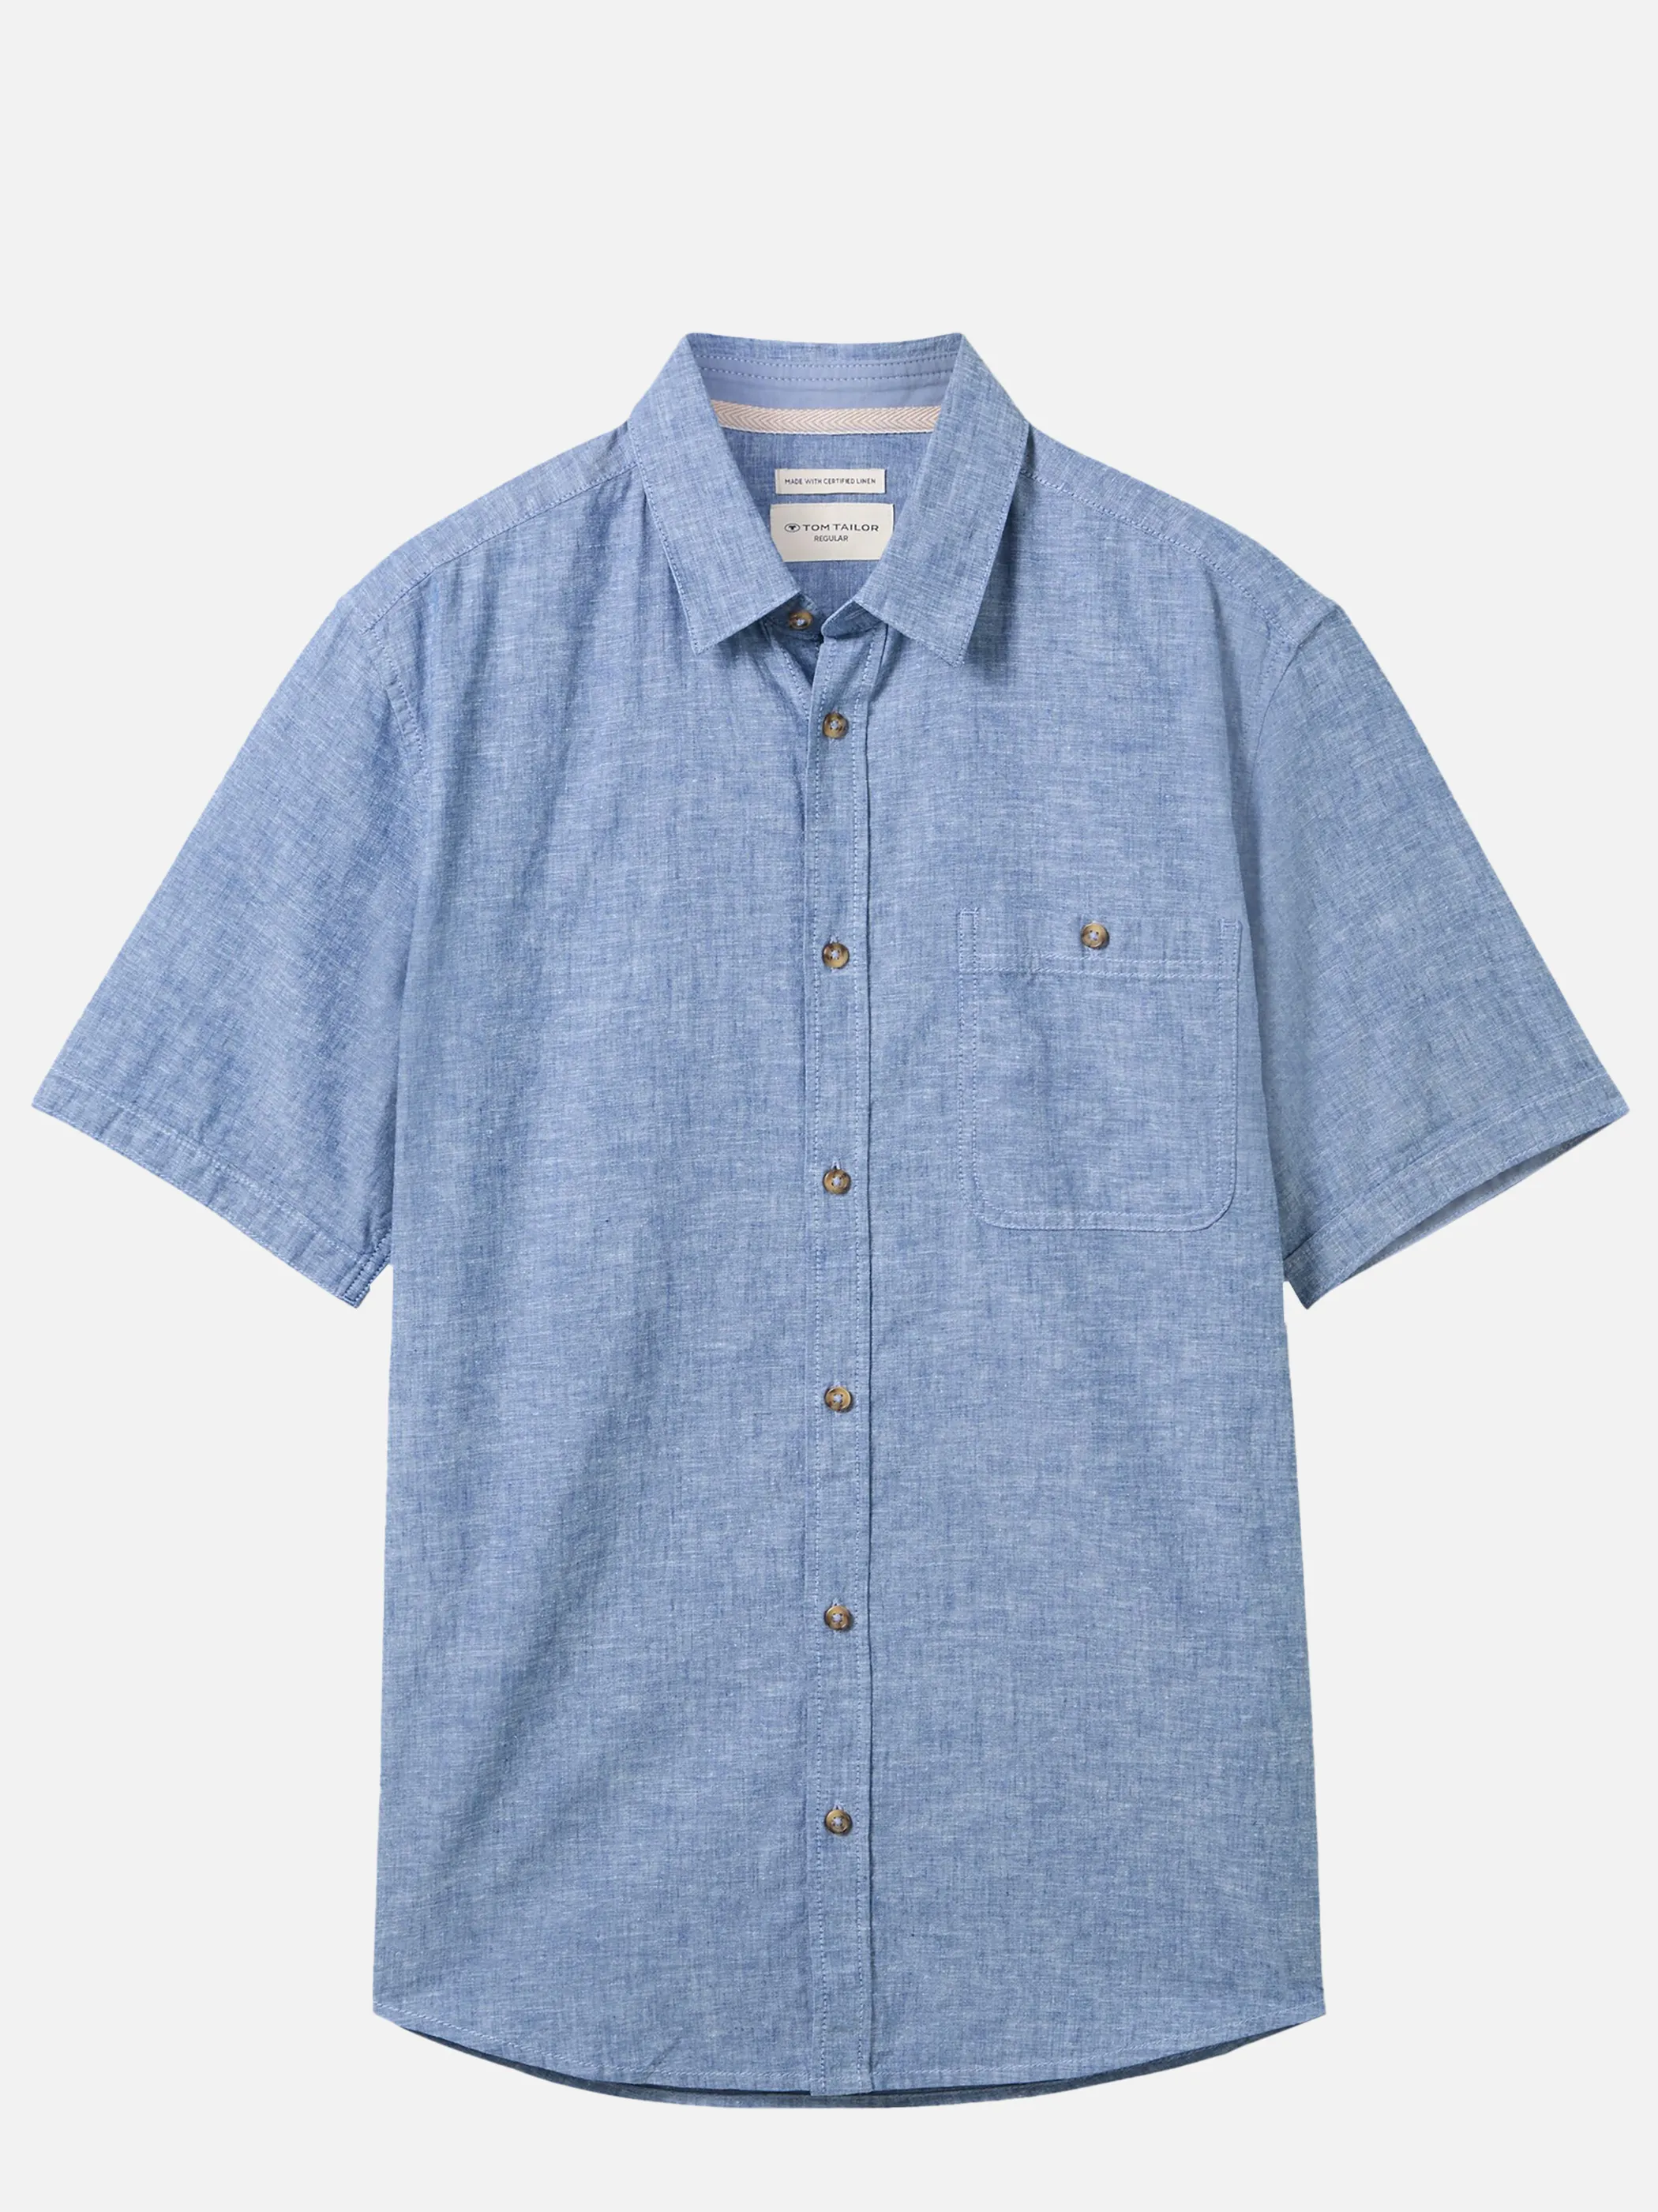 Tom Tailor 1042351 NOS cotton linen shirt Blau 890939 34922 1